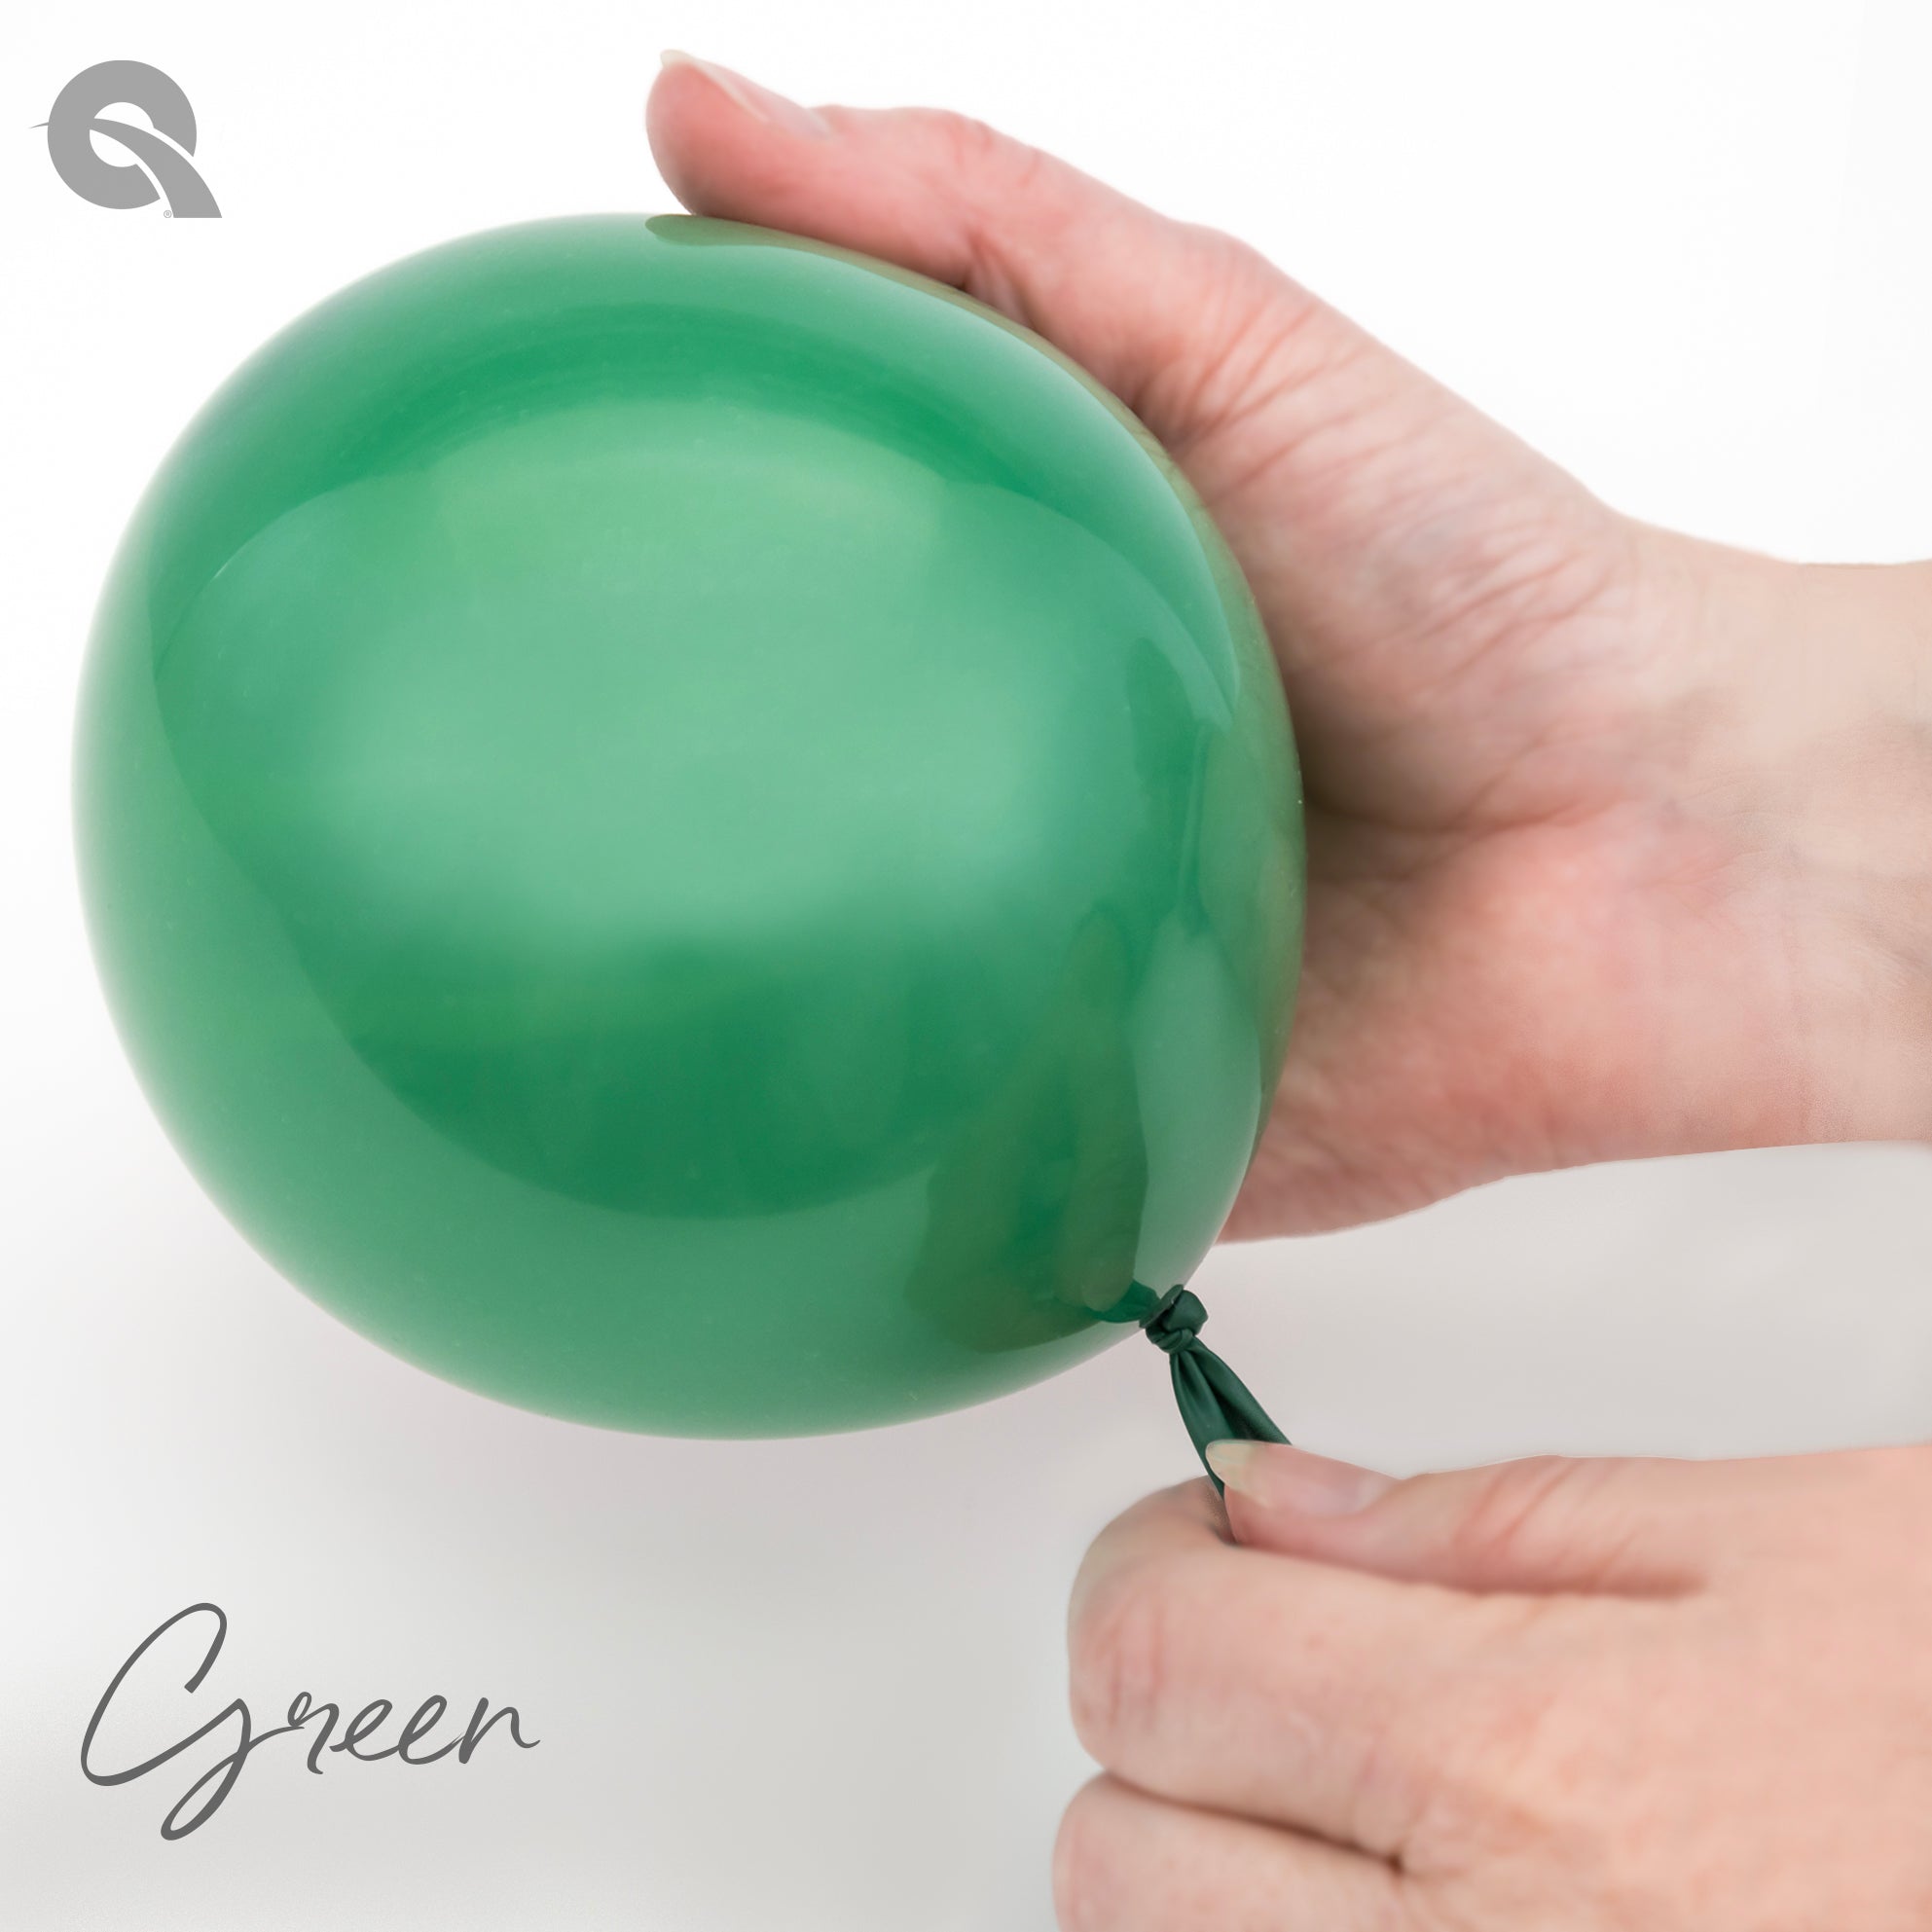 5" Qualatex Green Latex Balloons| 100 Count